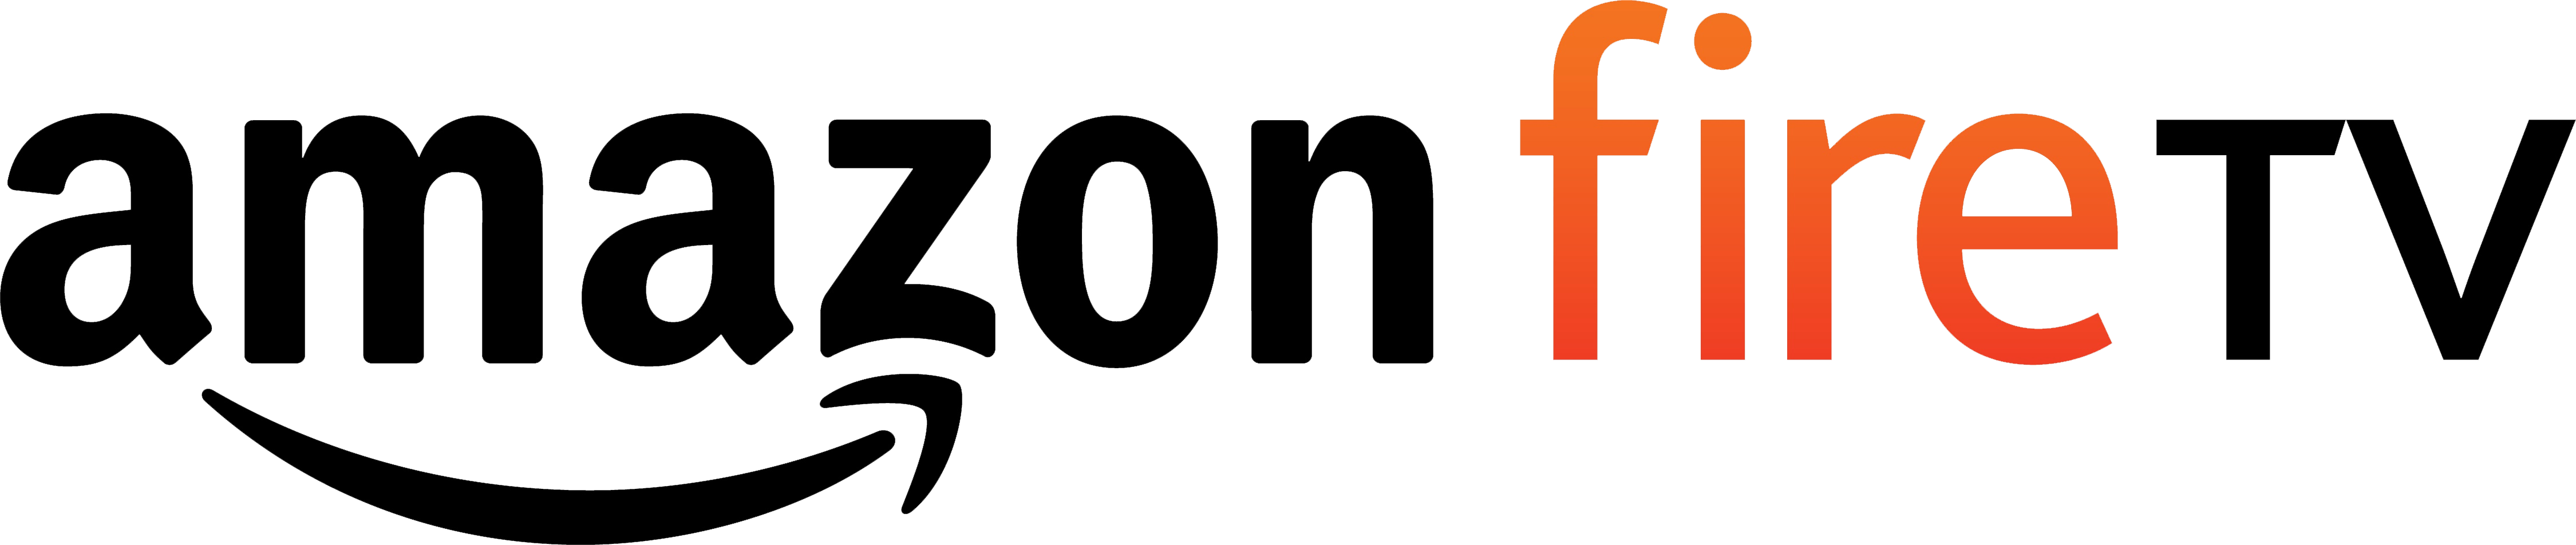 Amazon Fire TV Logo - Amazon Fire TV | Logopedia | FANDOM powered by Wikia